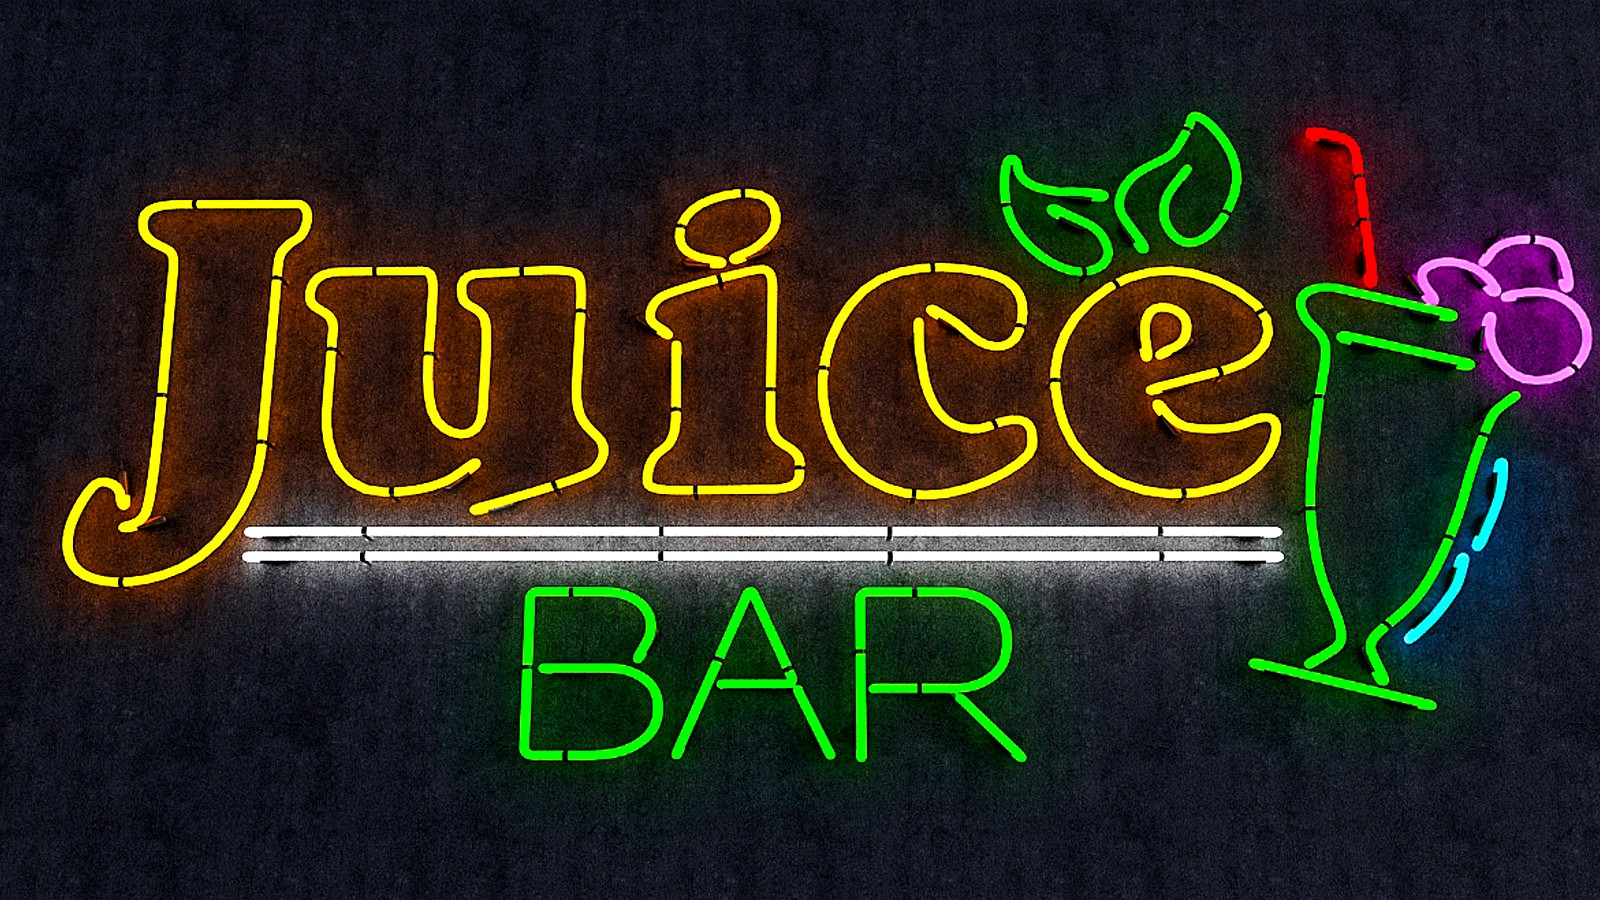 Juice Bar Neon Sign